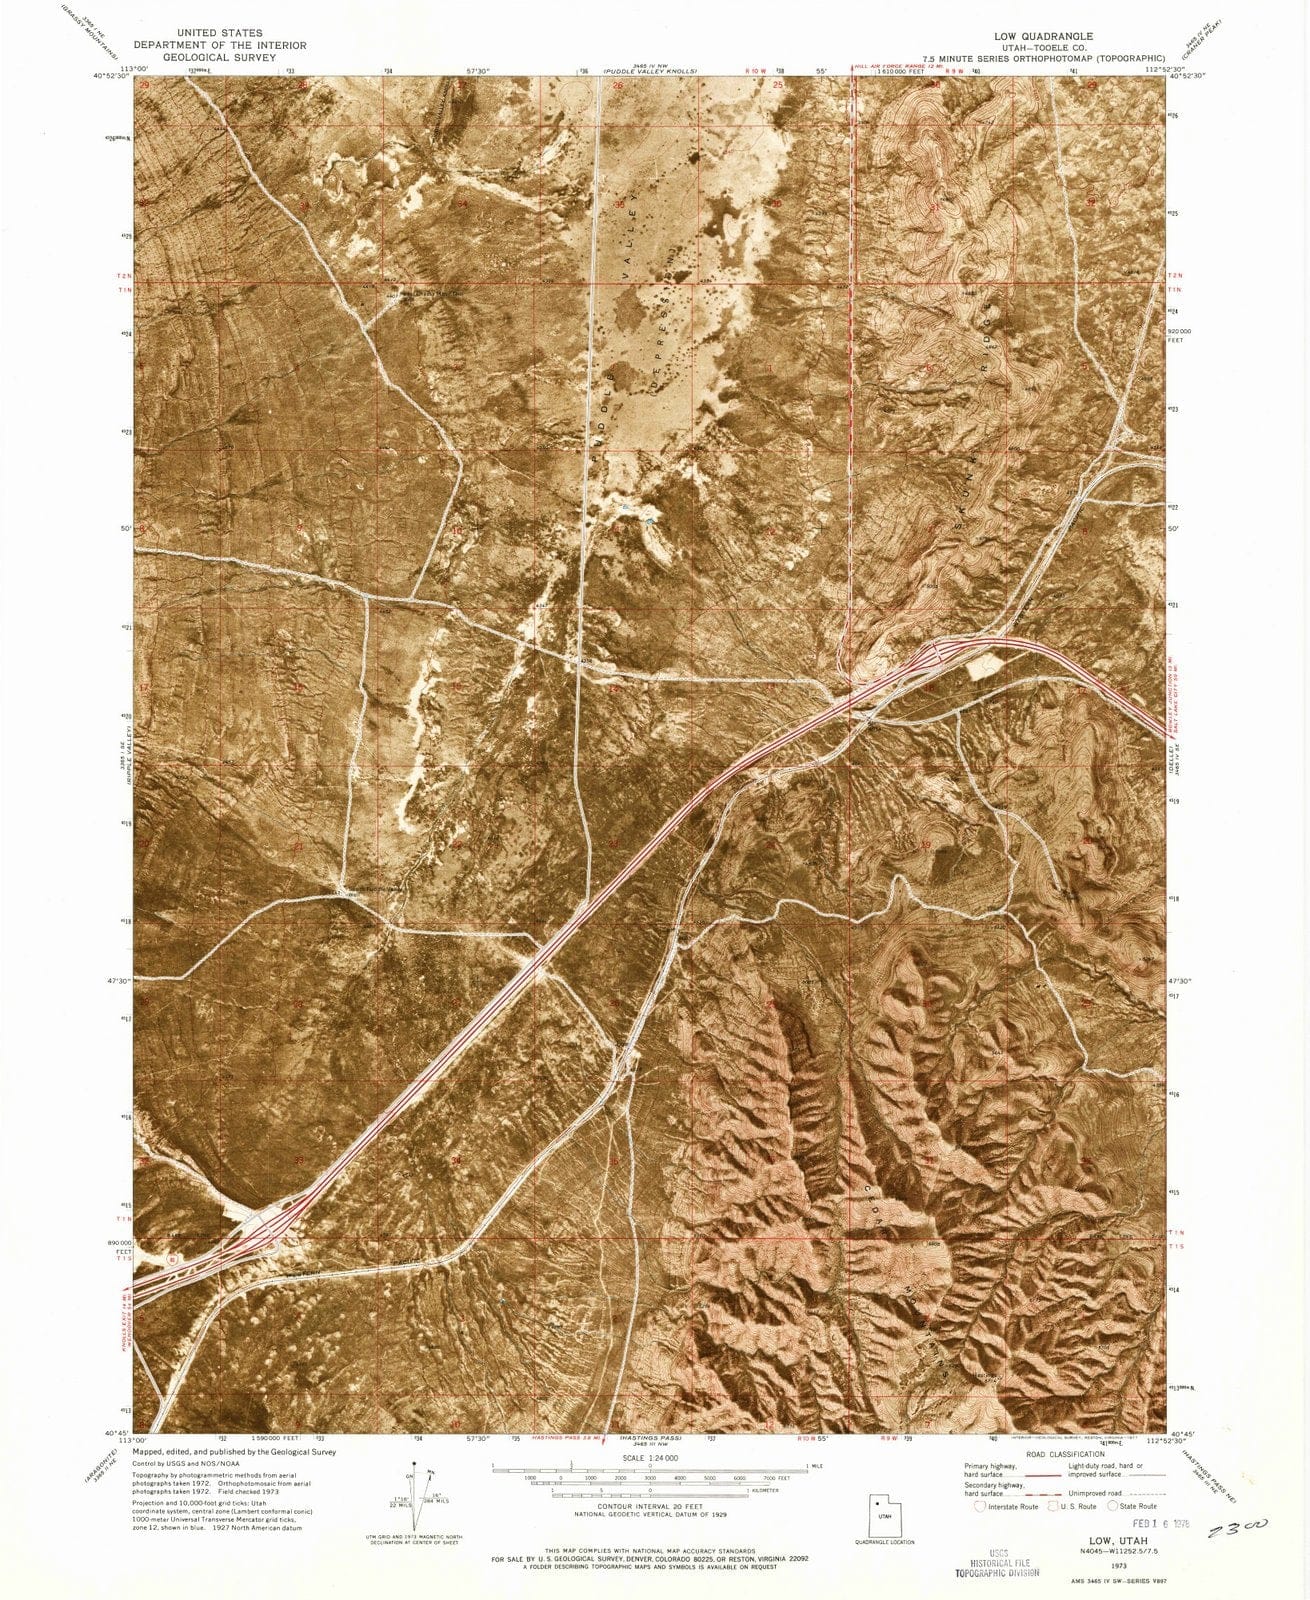 1973 Low, UT - Utah - USGS Topographic Map